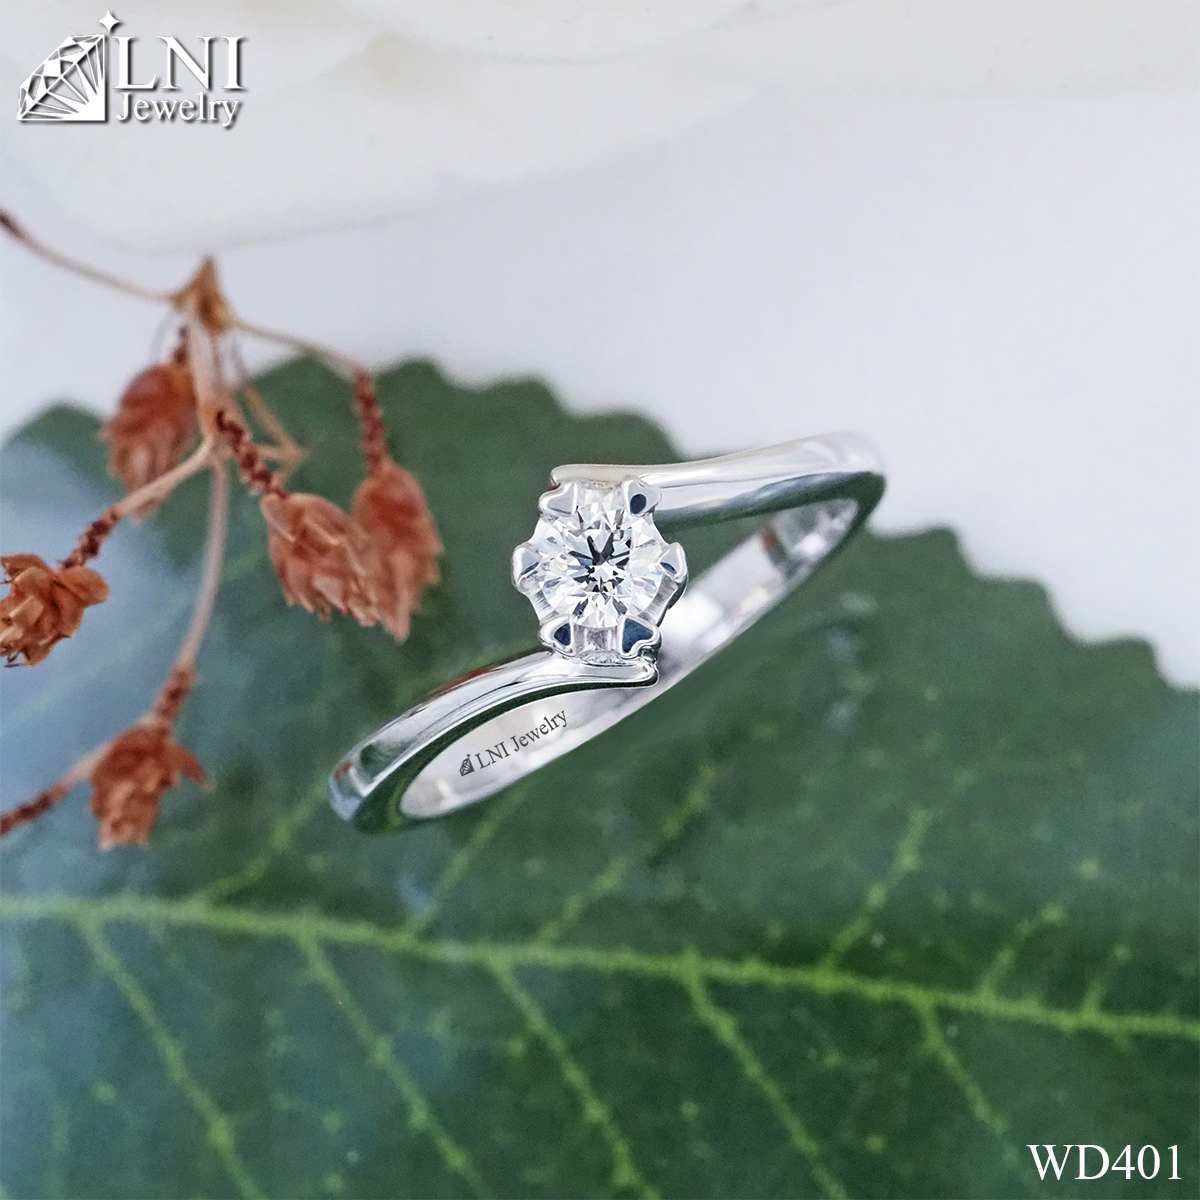 WD401 Single Diamond Ring